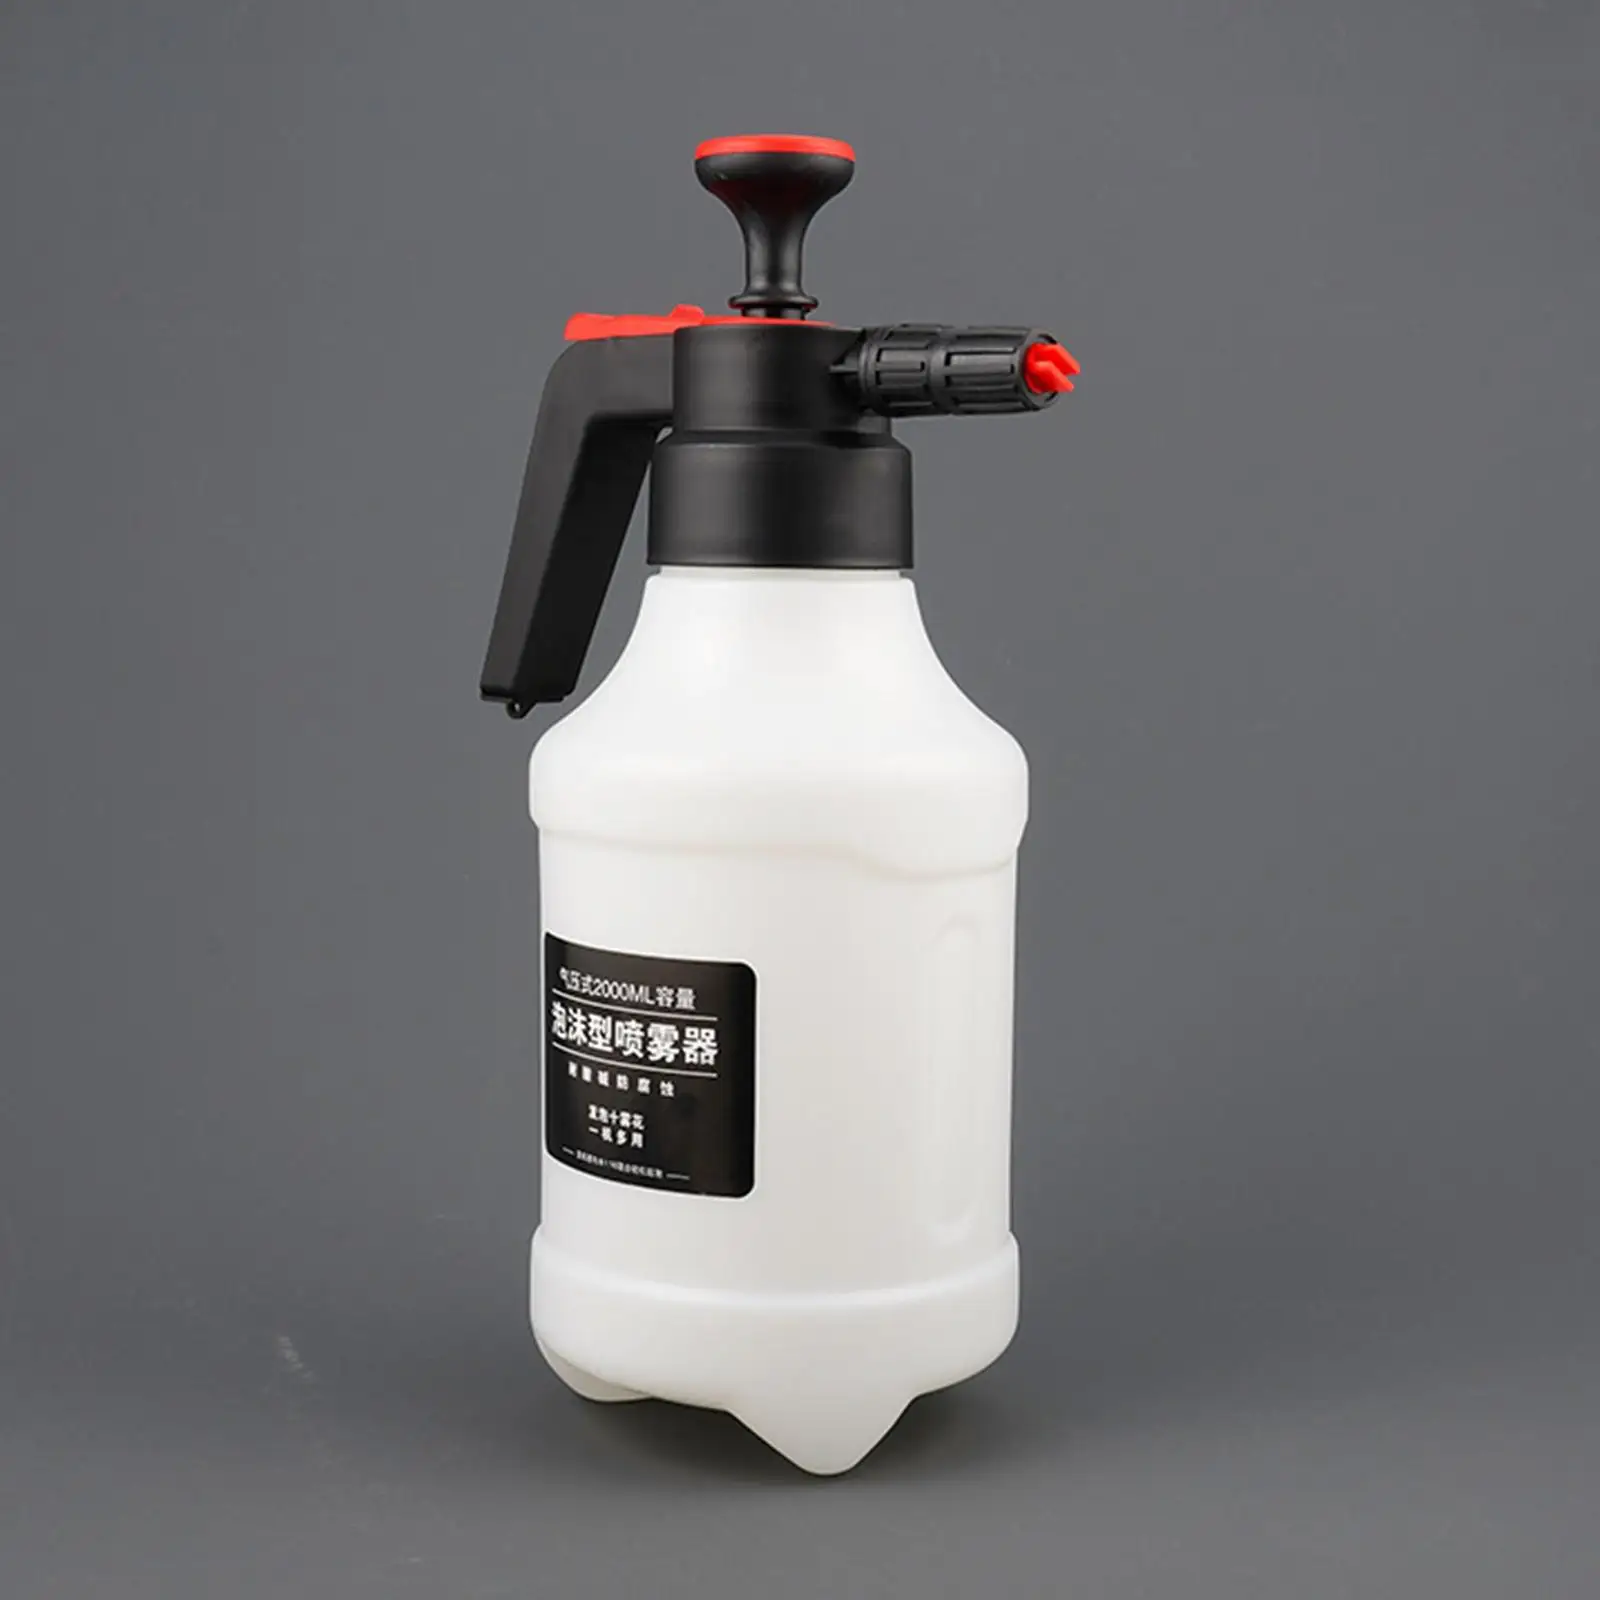 Car Water Sprayer Single Hand Pressure 2.0L for Car Window Washing